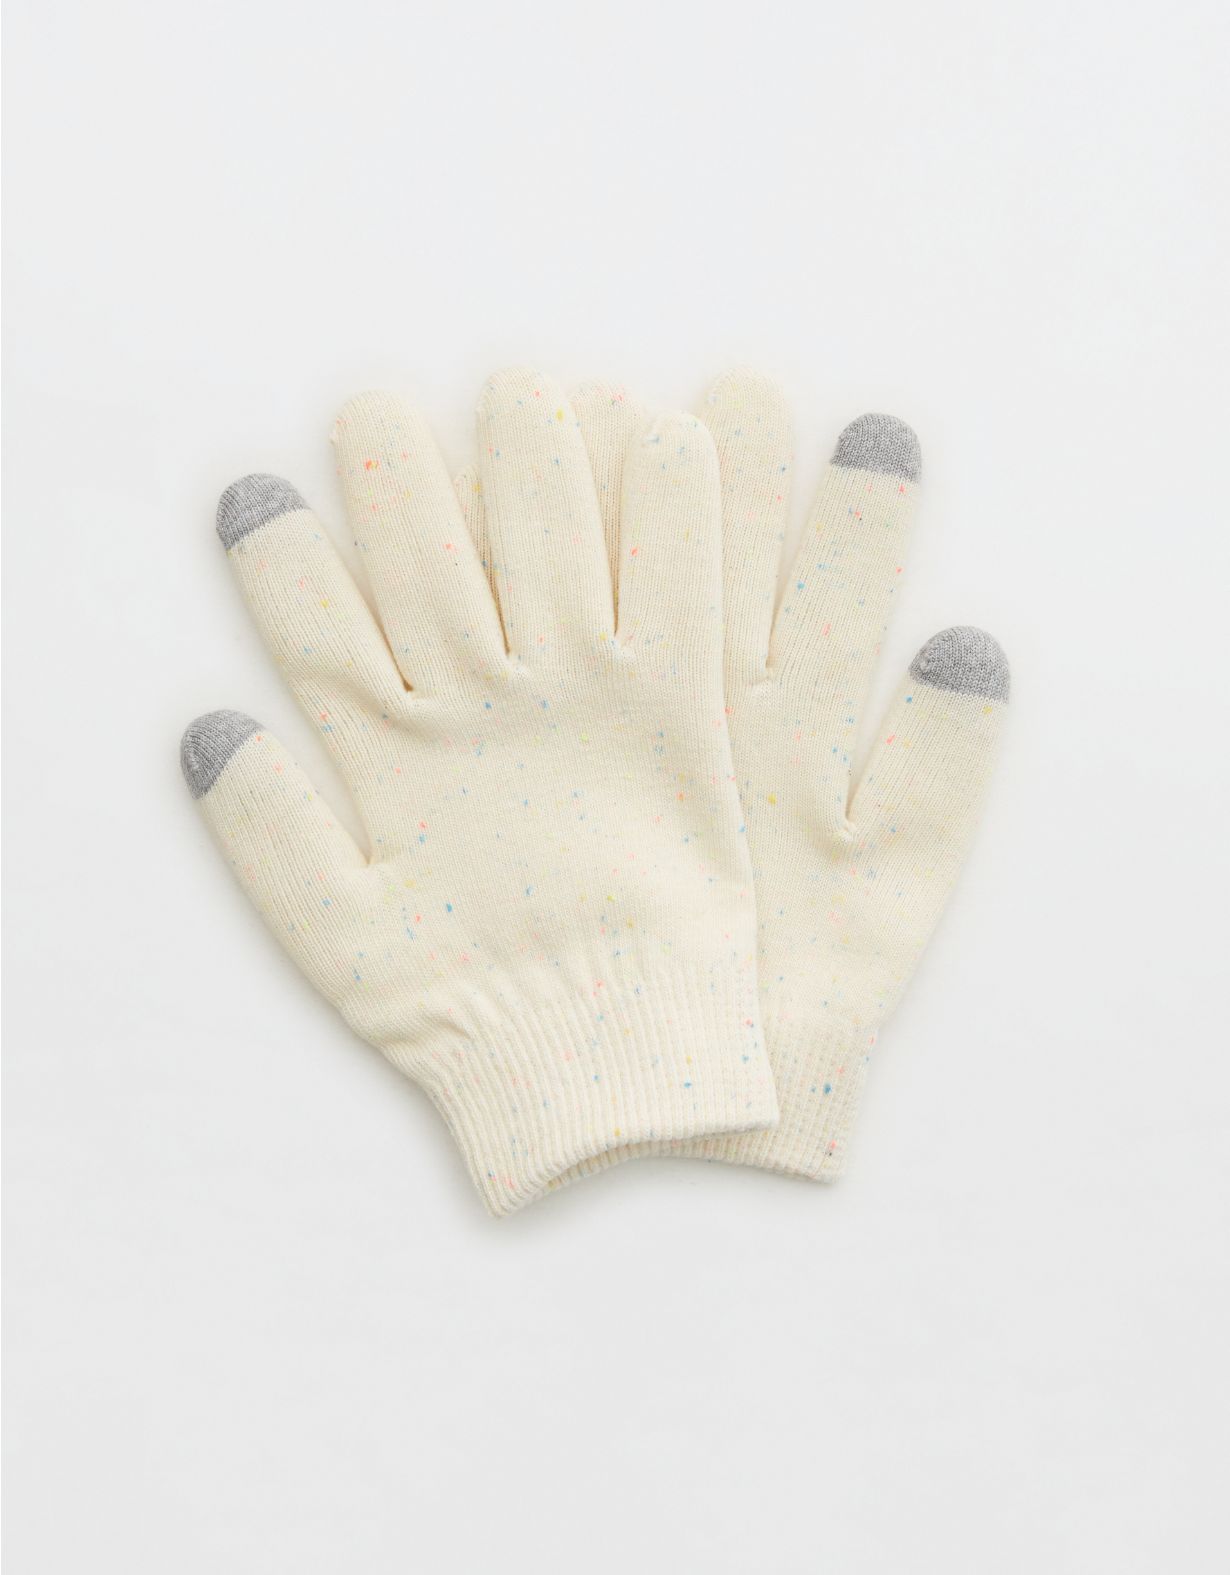 Kitsch Moisturizing Spa Gloves